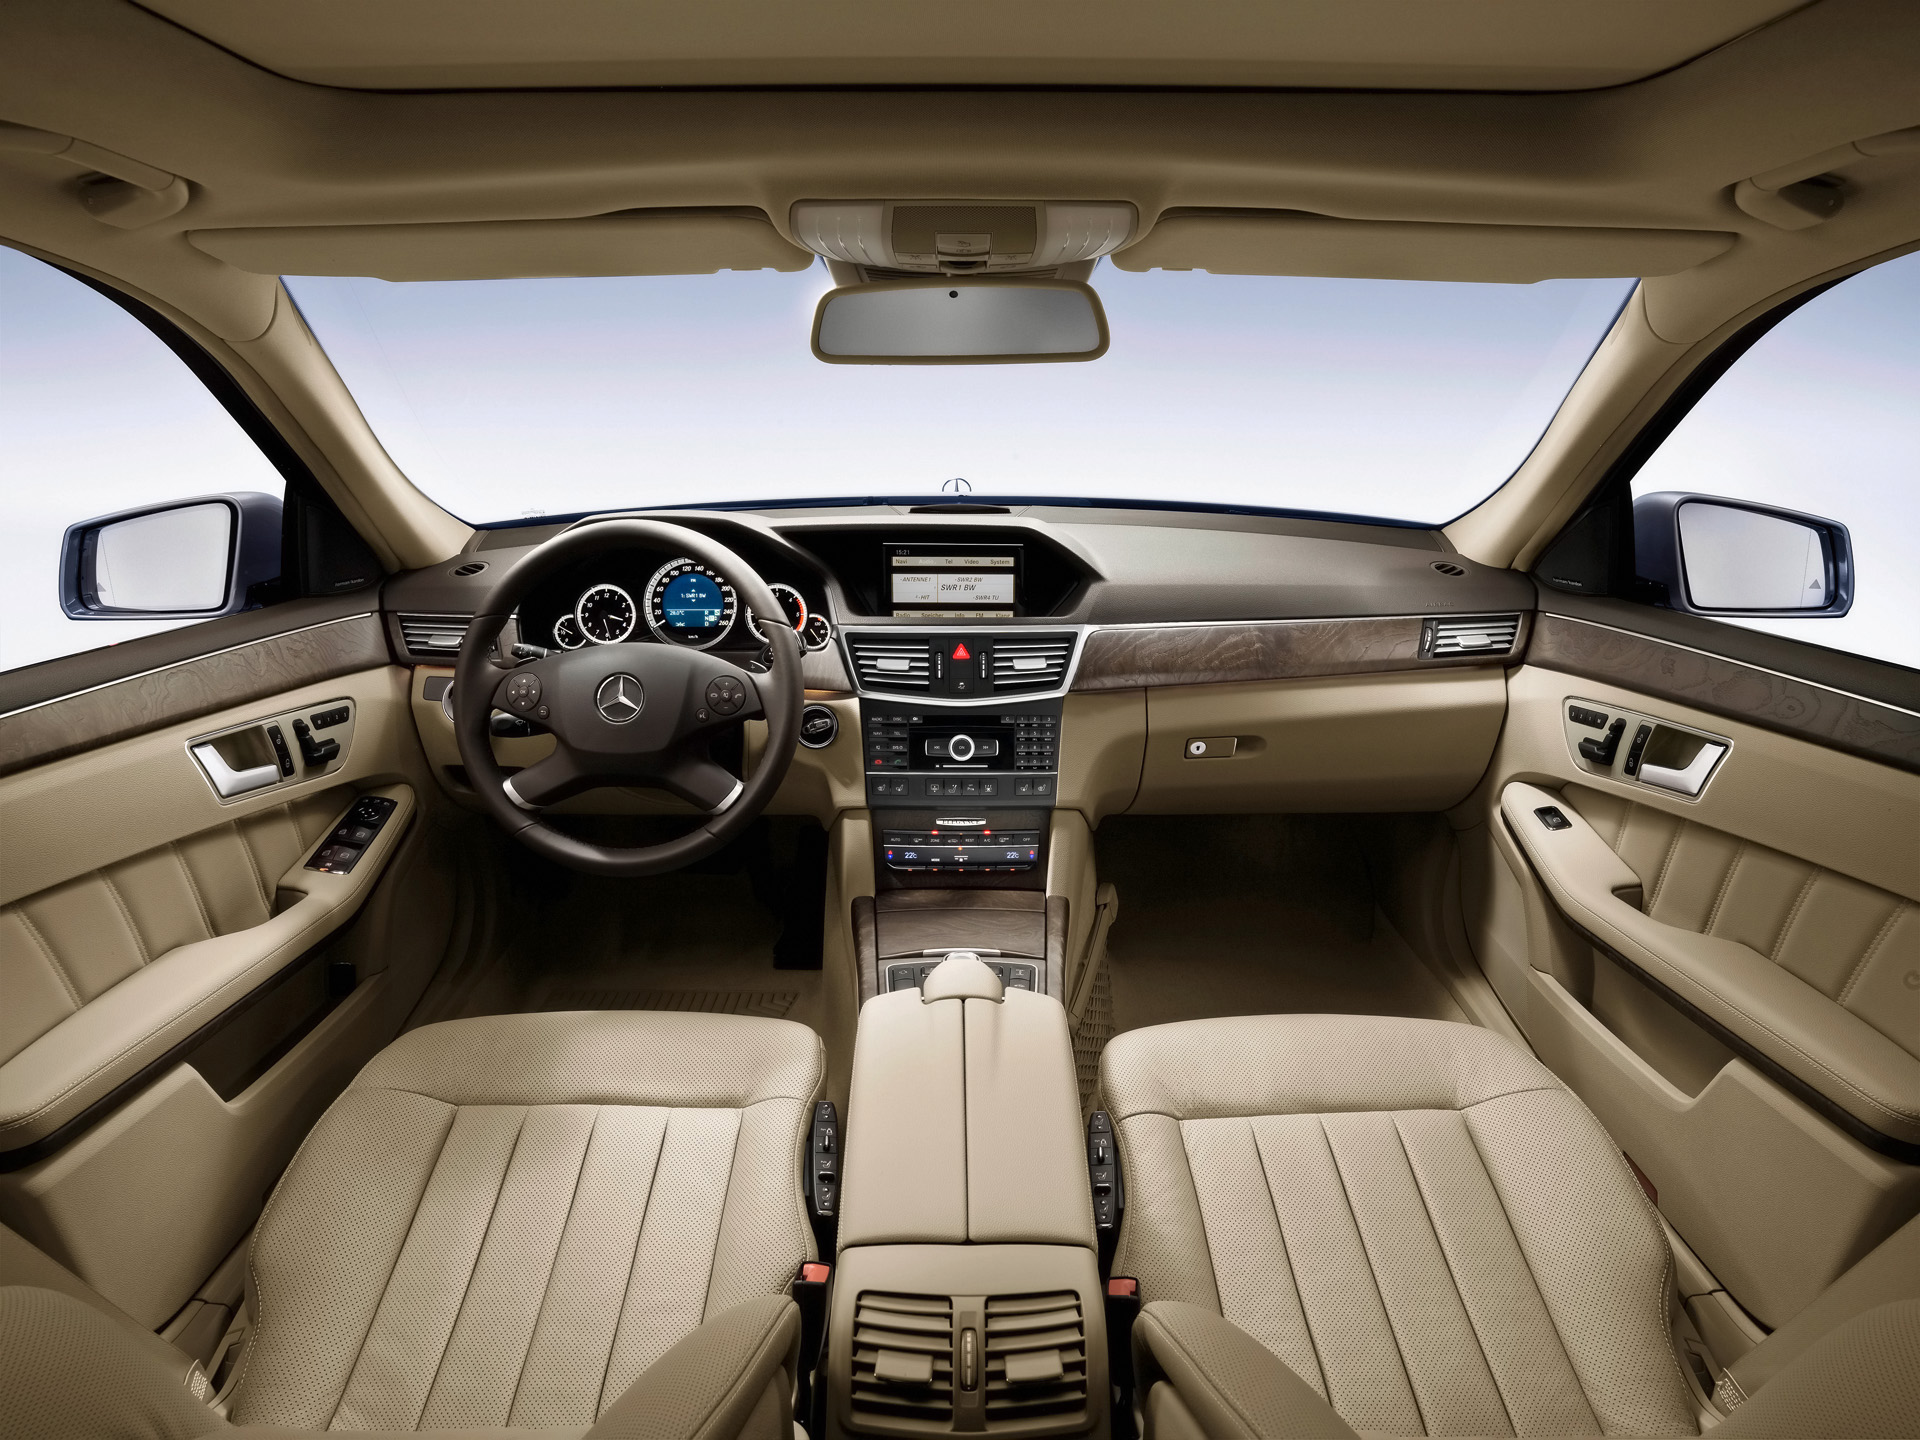 2010-Mercedes-Benz-E-Class-Interior-2-1920x1440.jpg